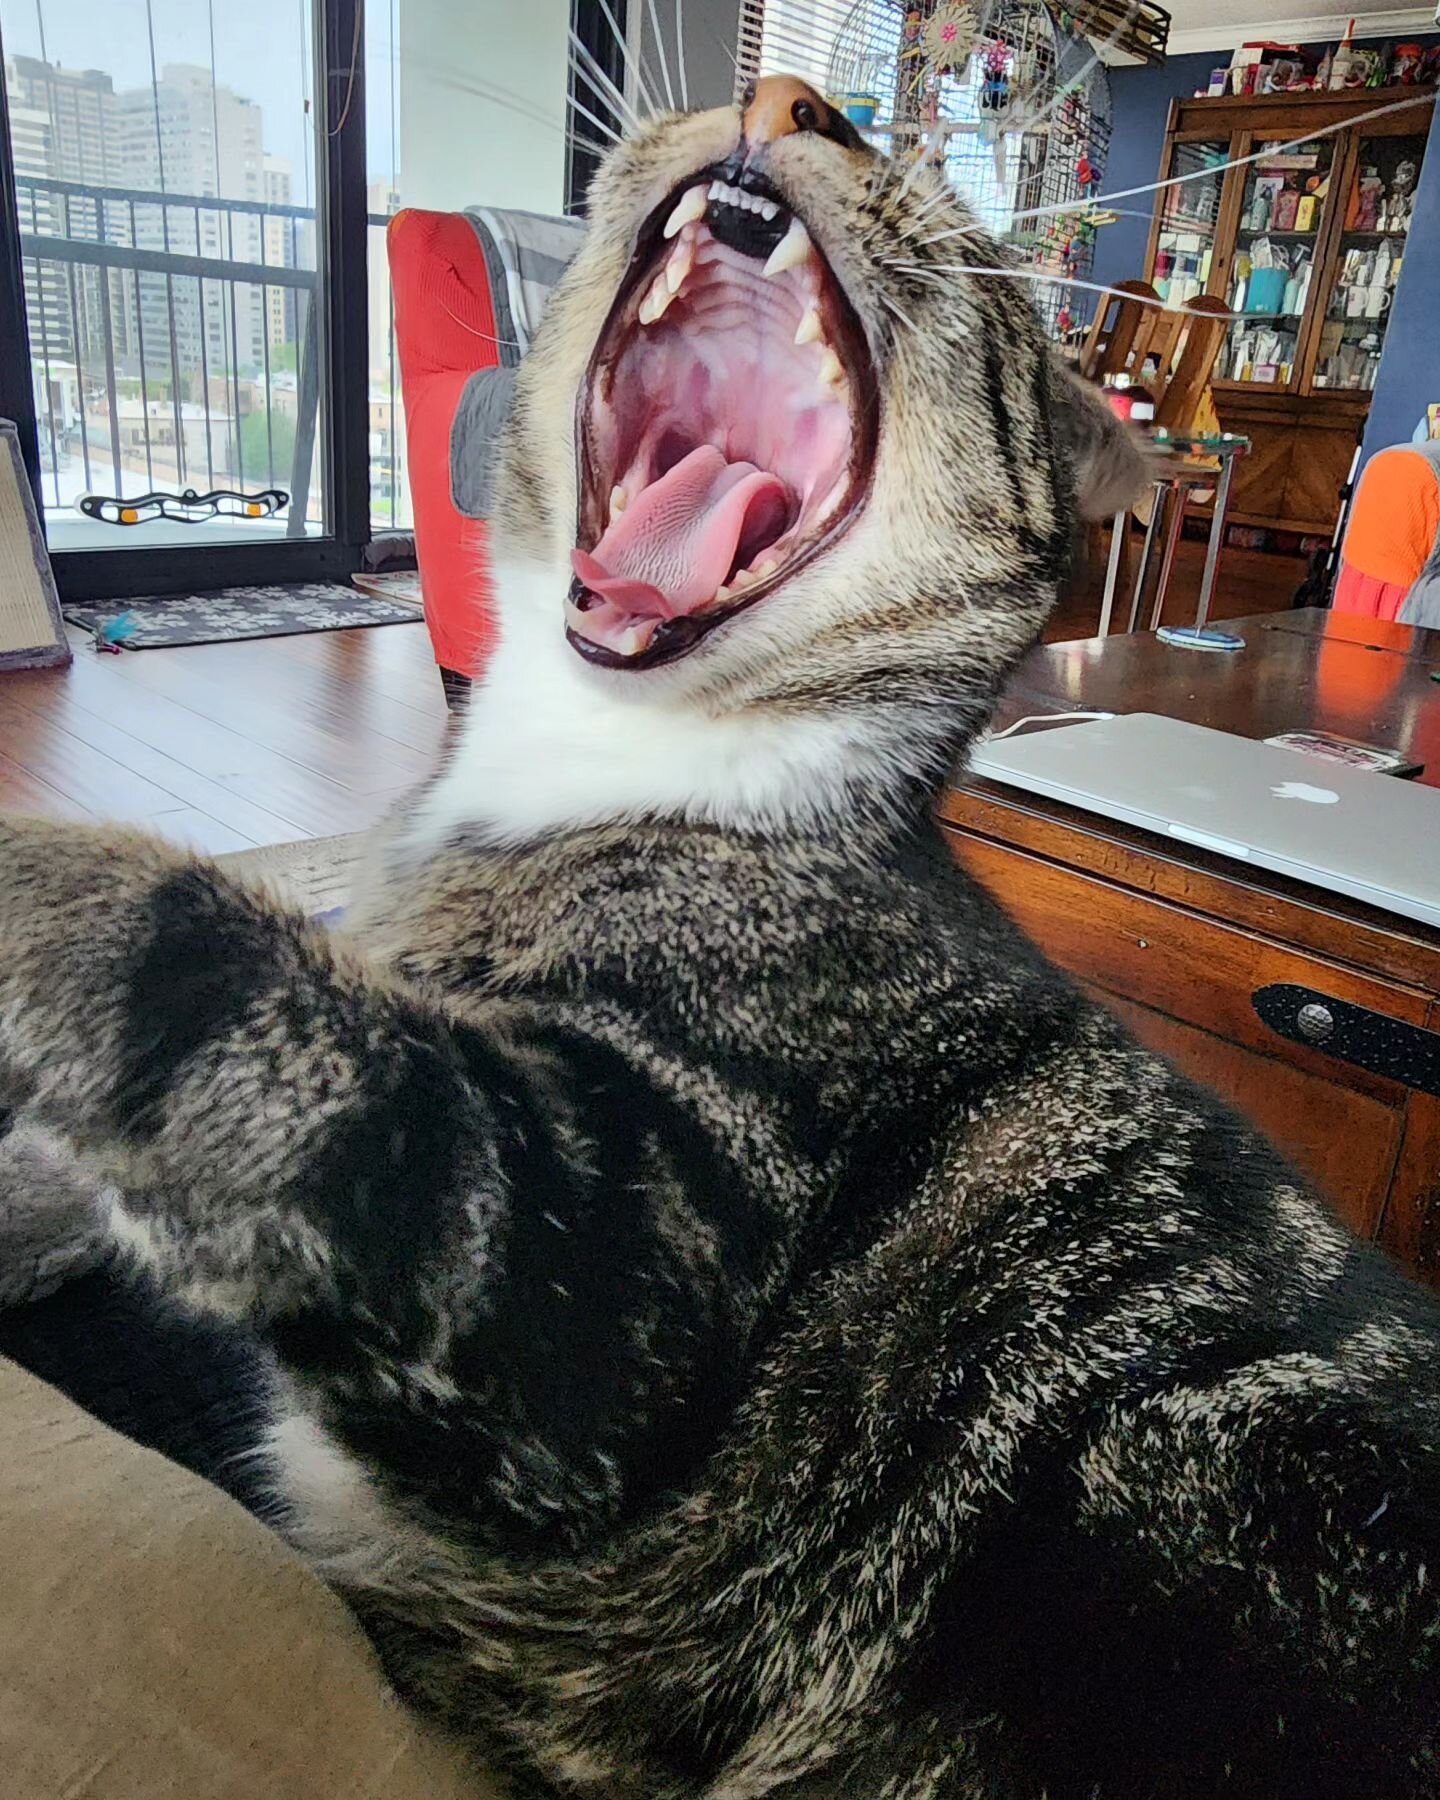 Caught an Anya yawn today 🥱